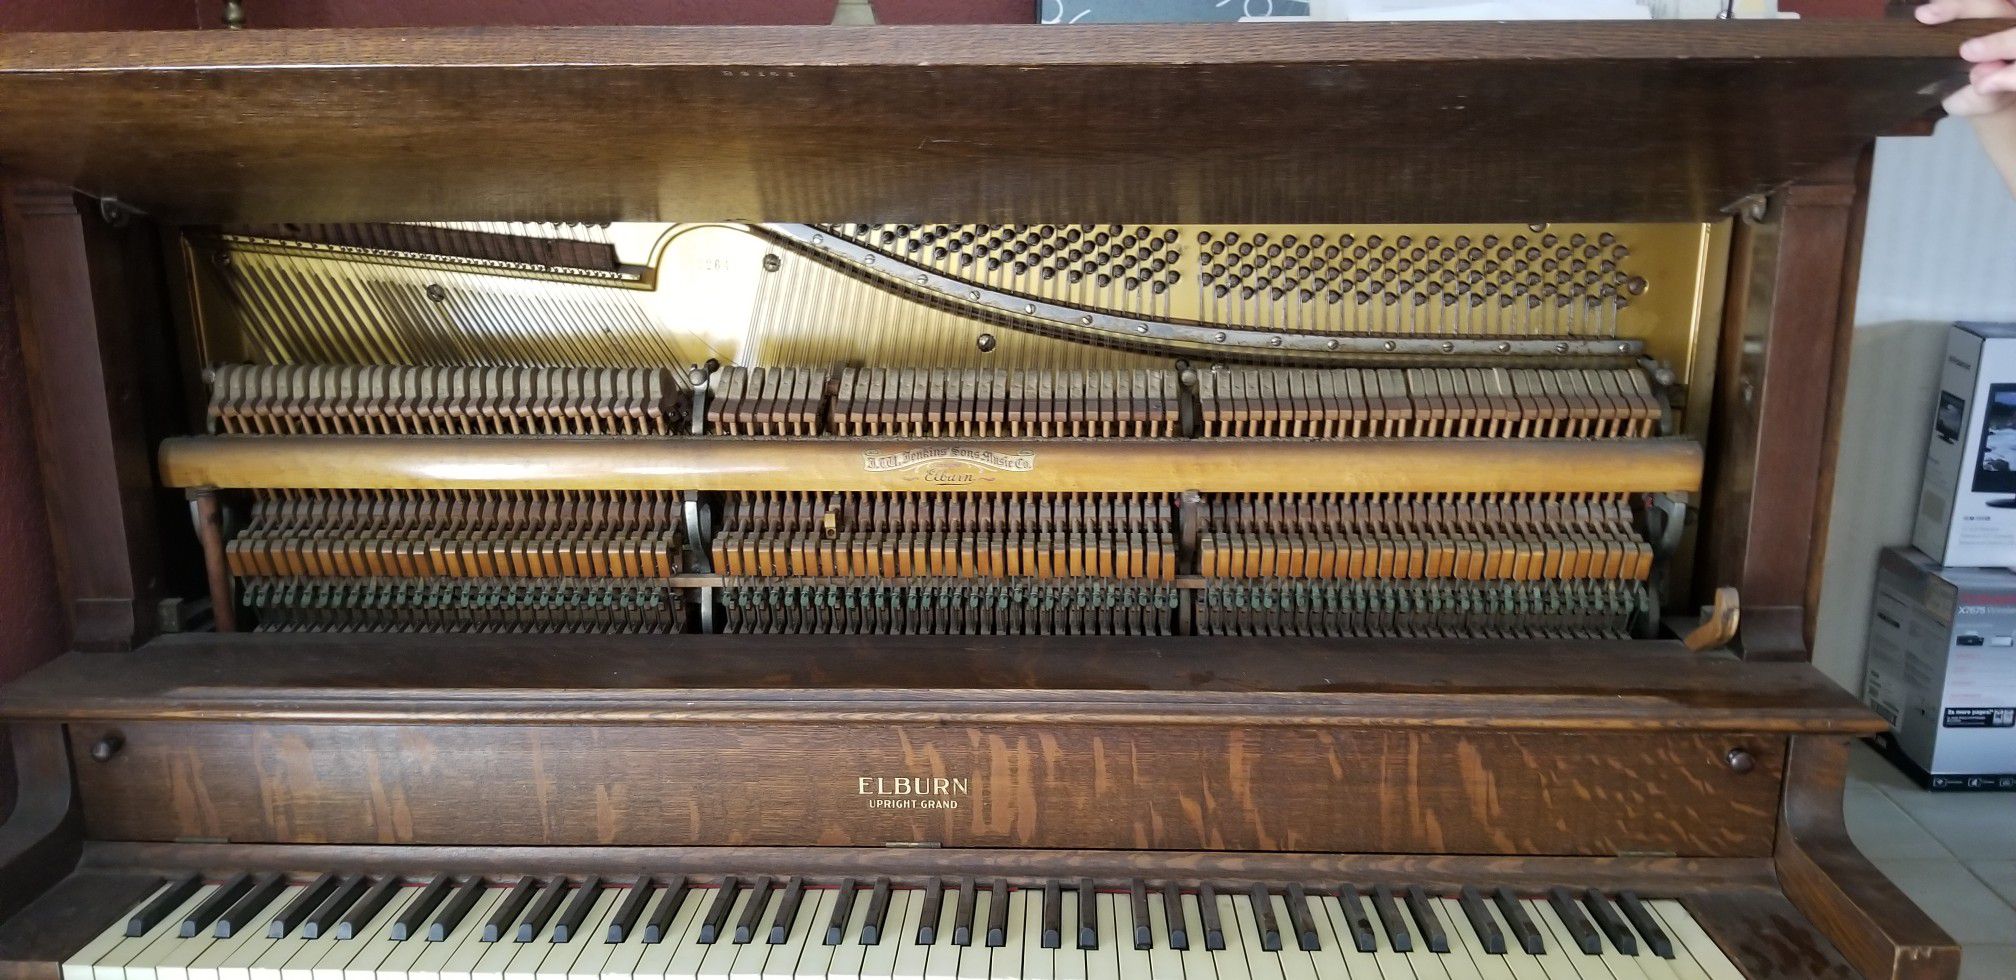 FREE! - Elburn antique 1917 upright oak grand piano